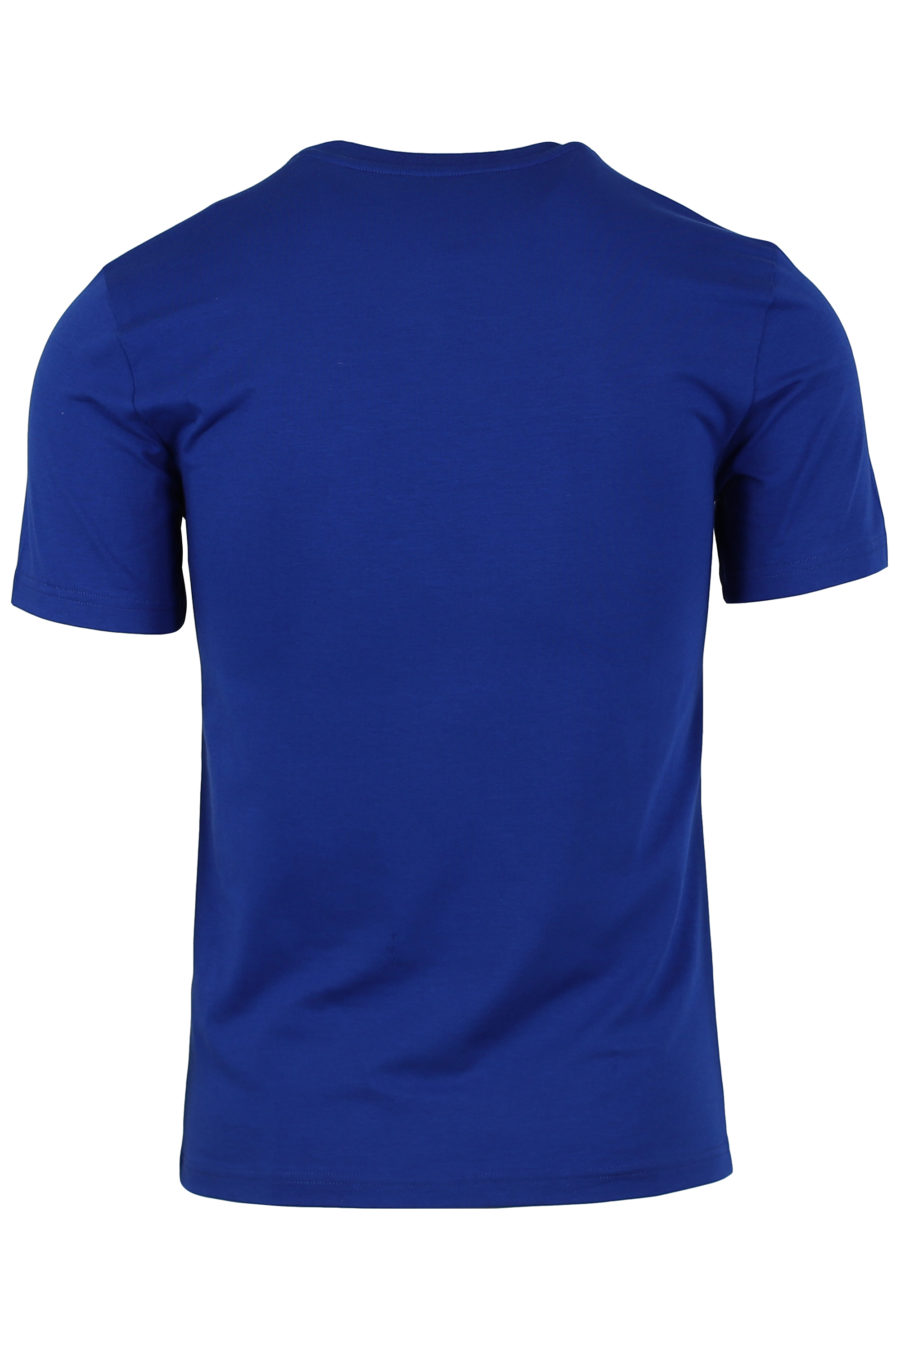 Camiseta azul logo grande parte delantera - IMG 0918